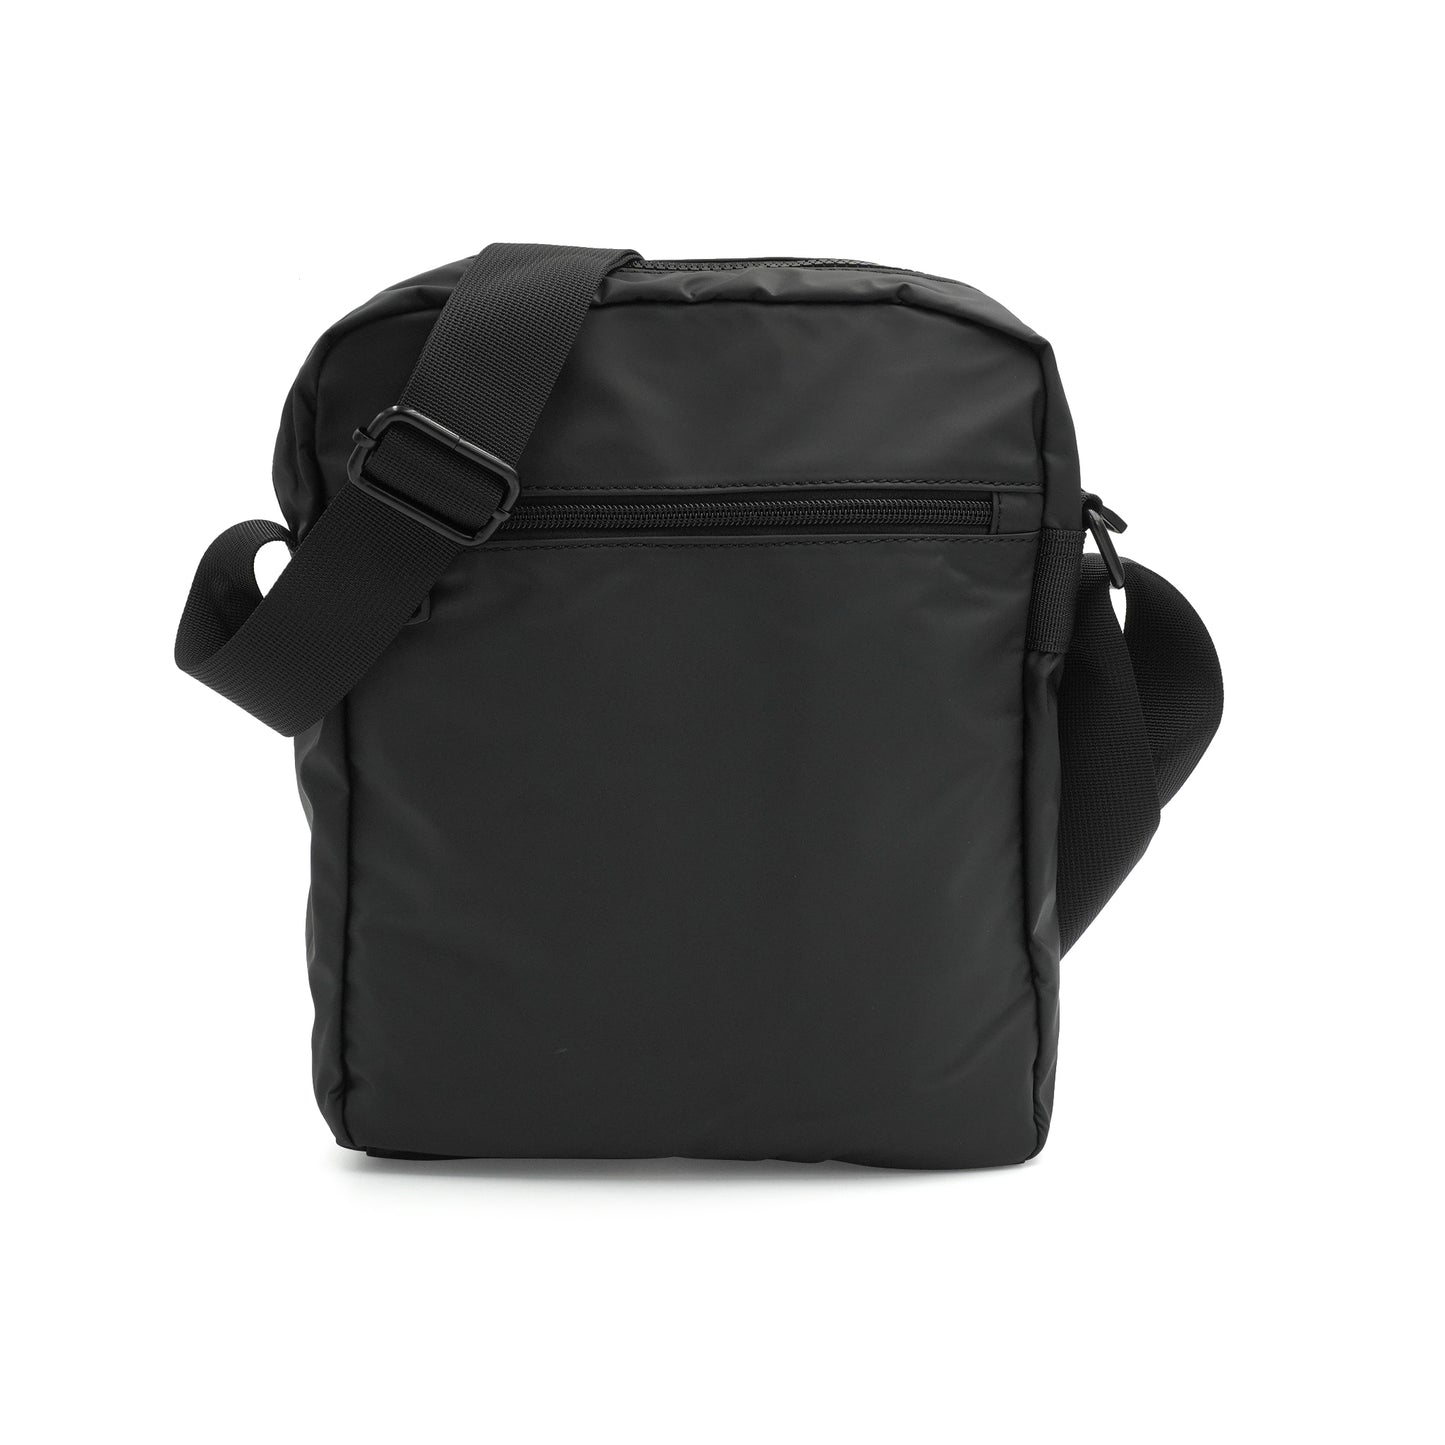 Alef Featherweight1 Lightweight Nylon Water-resistant Shoulder Bag (Black)